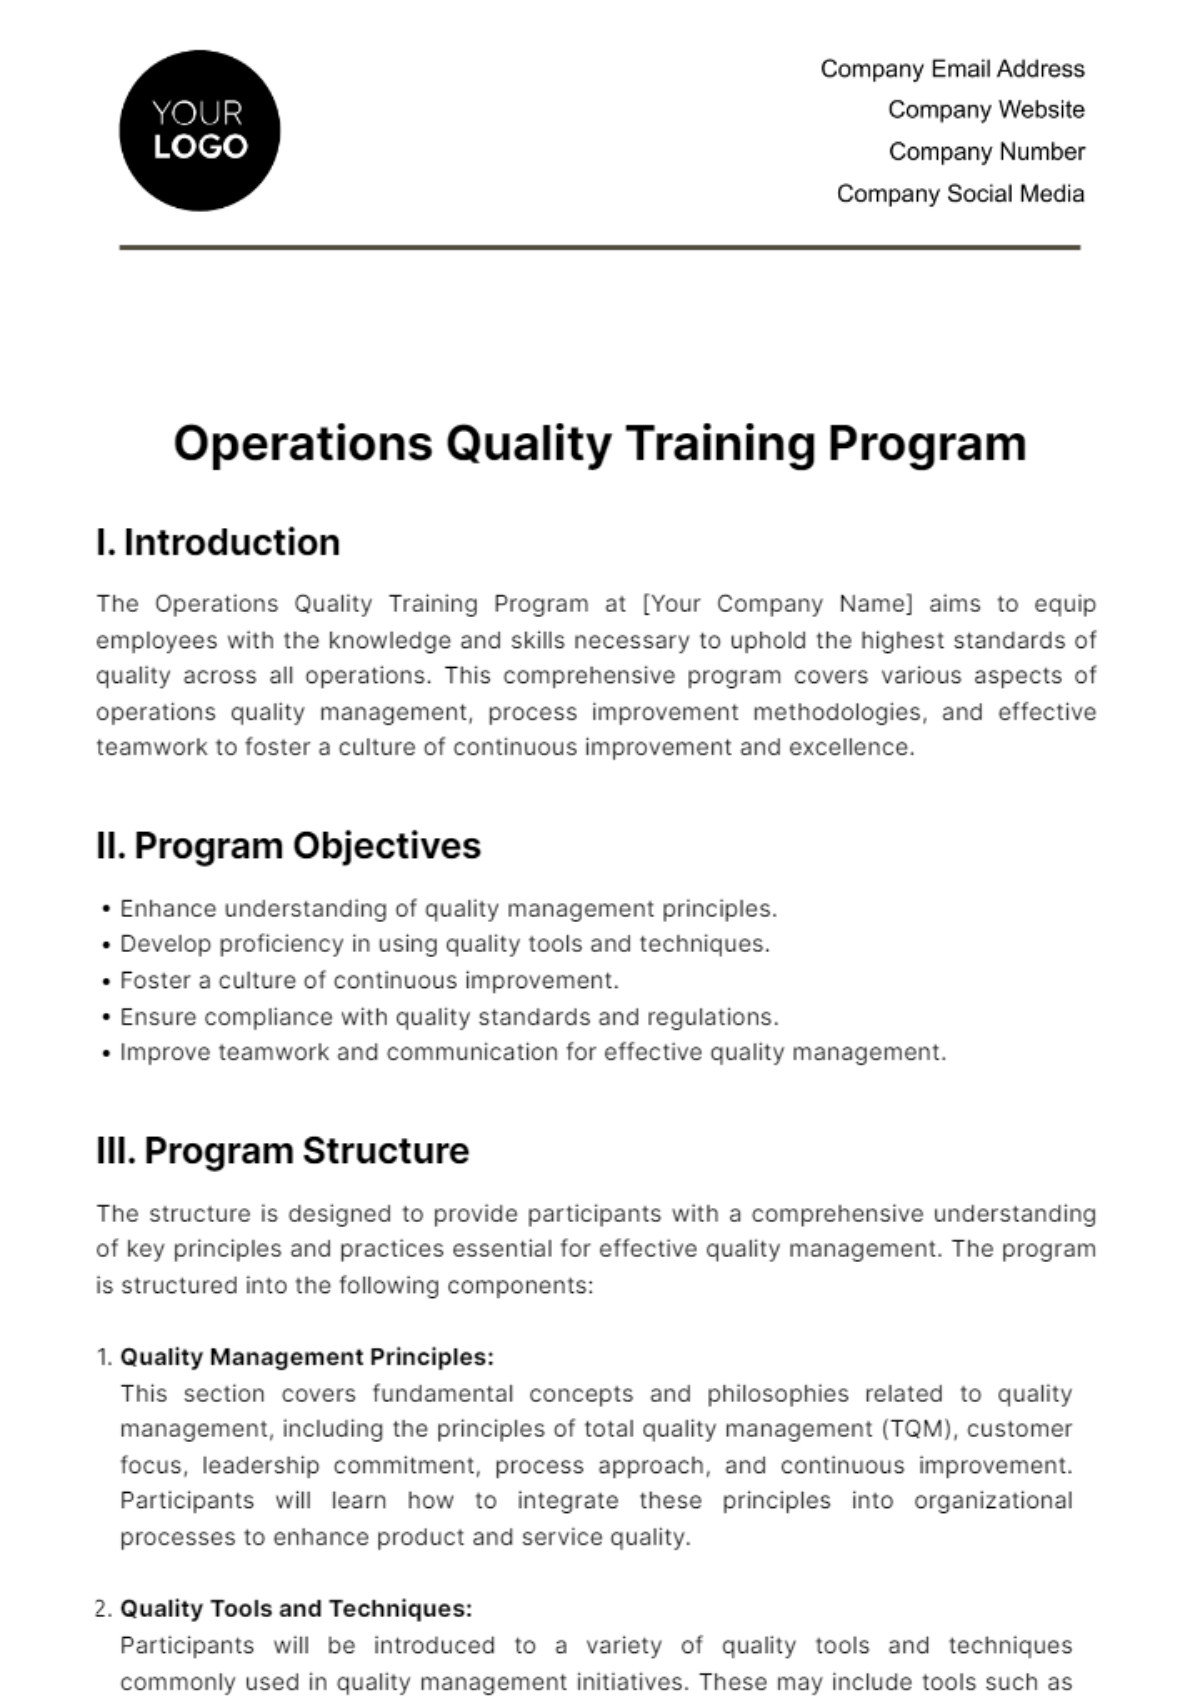 Operations Quality Training Program Template